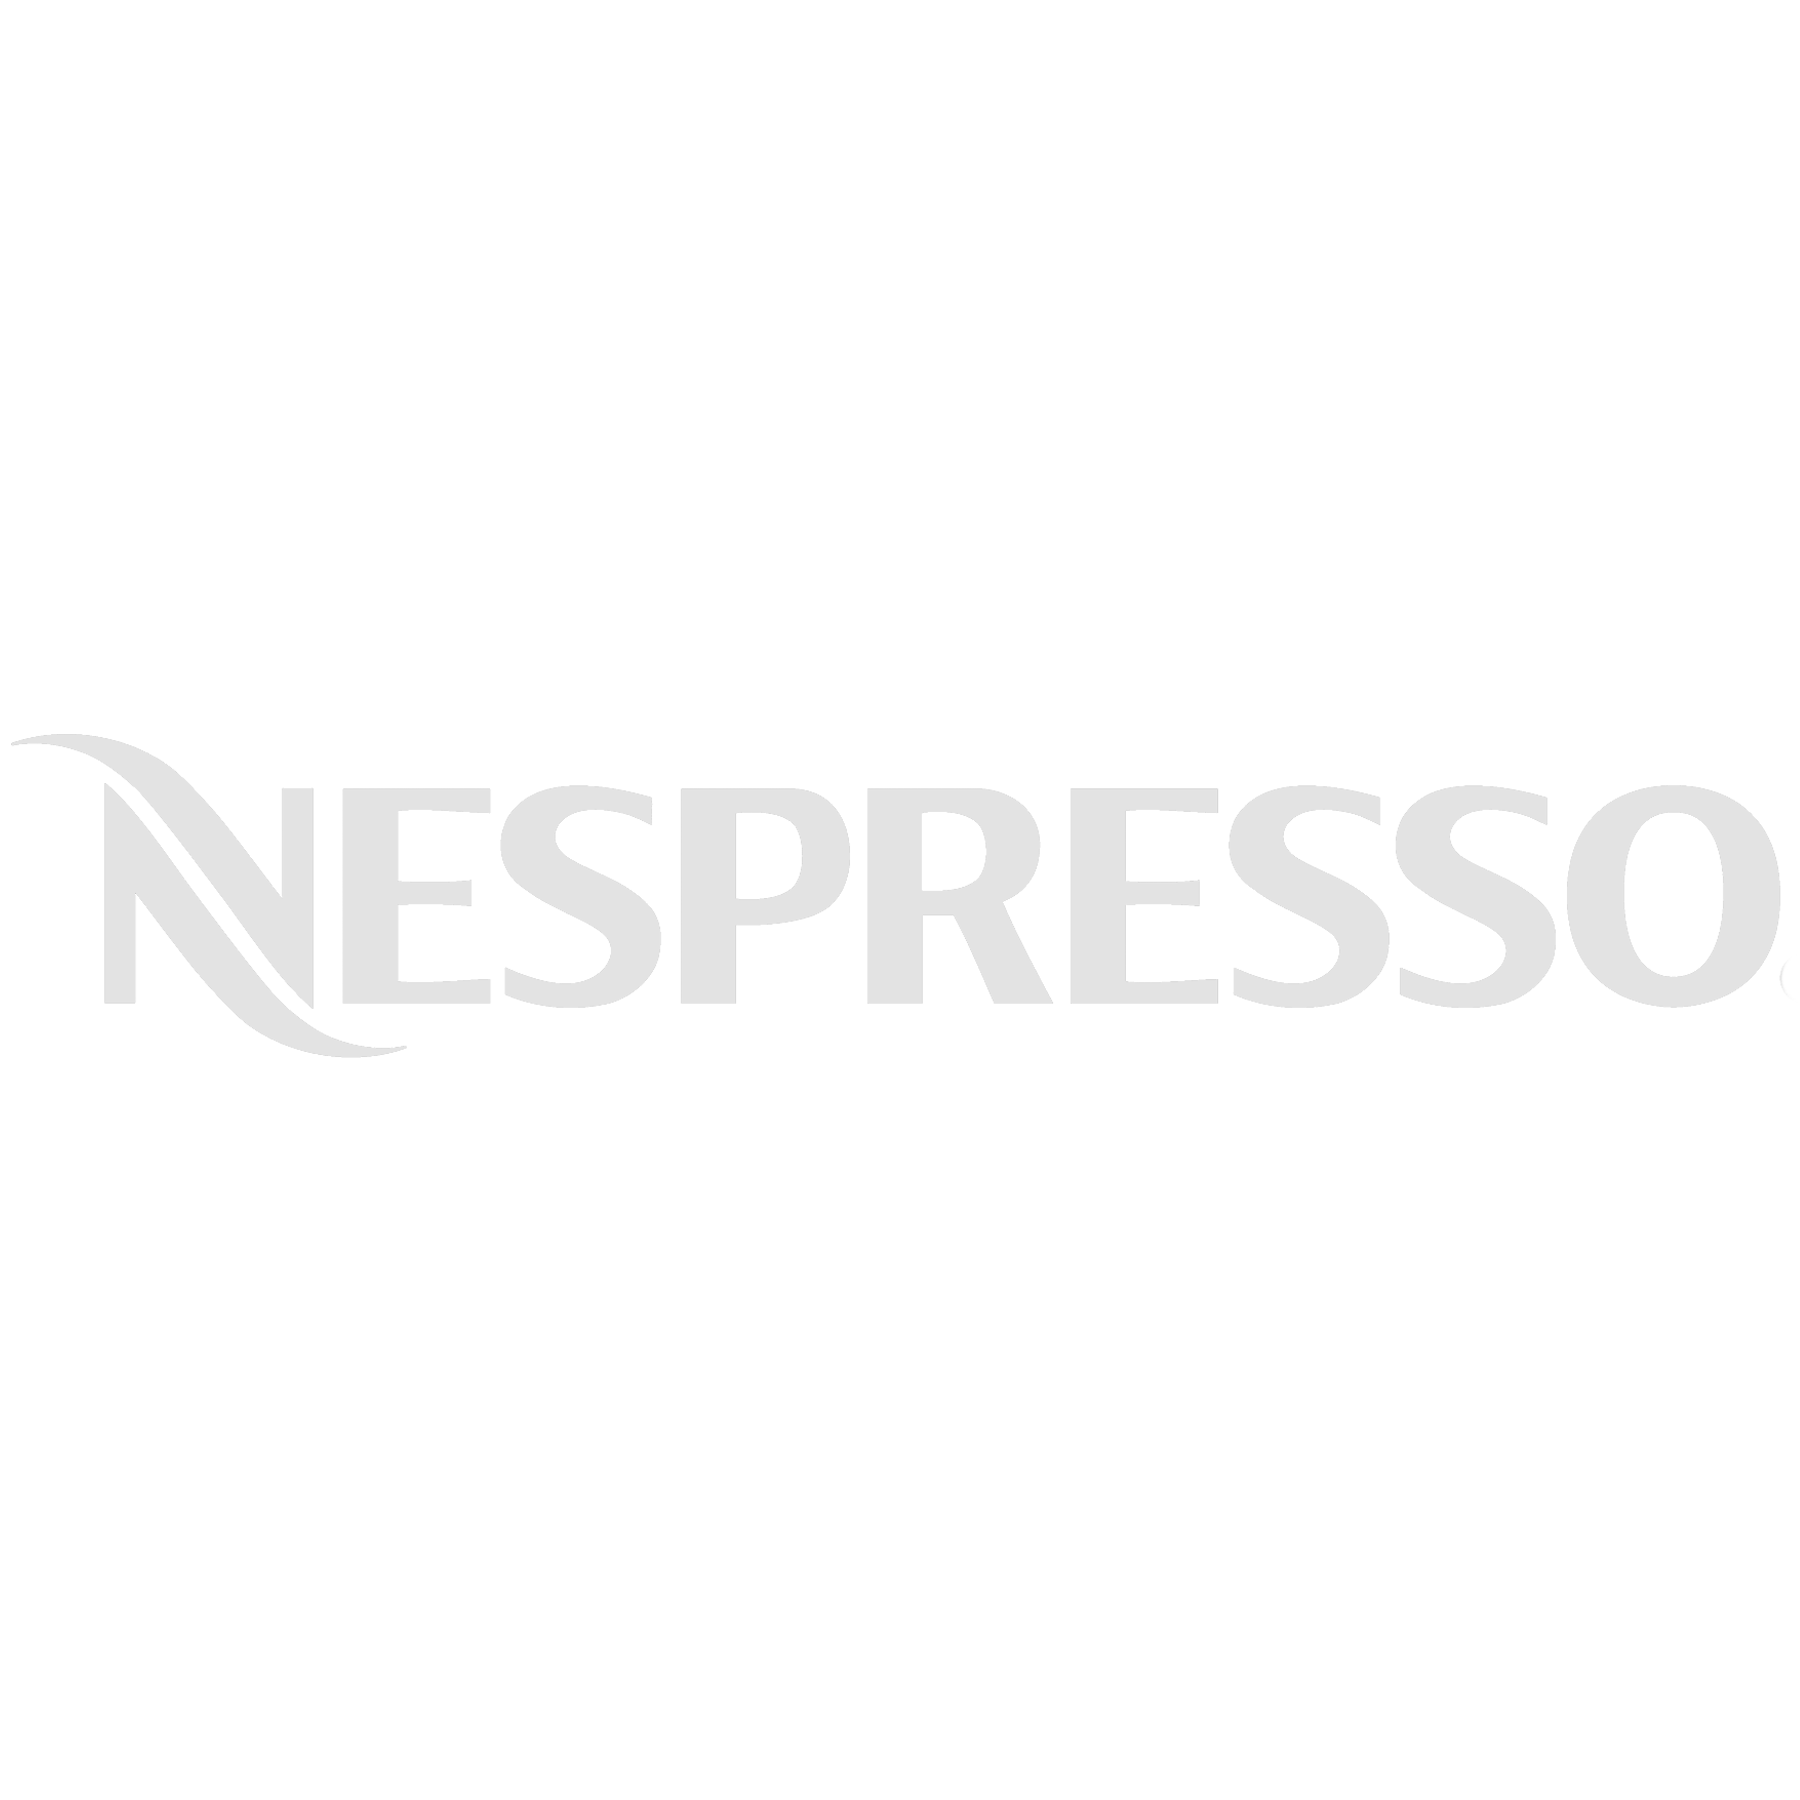 nespresso.png